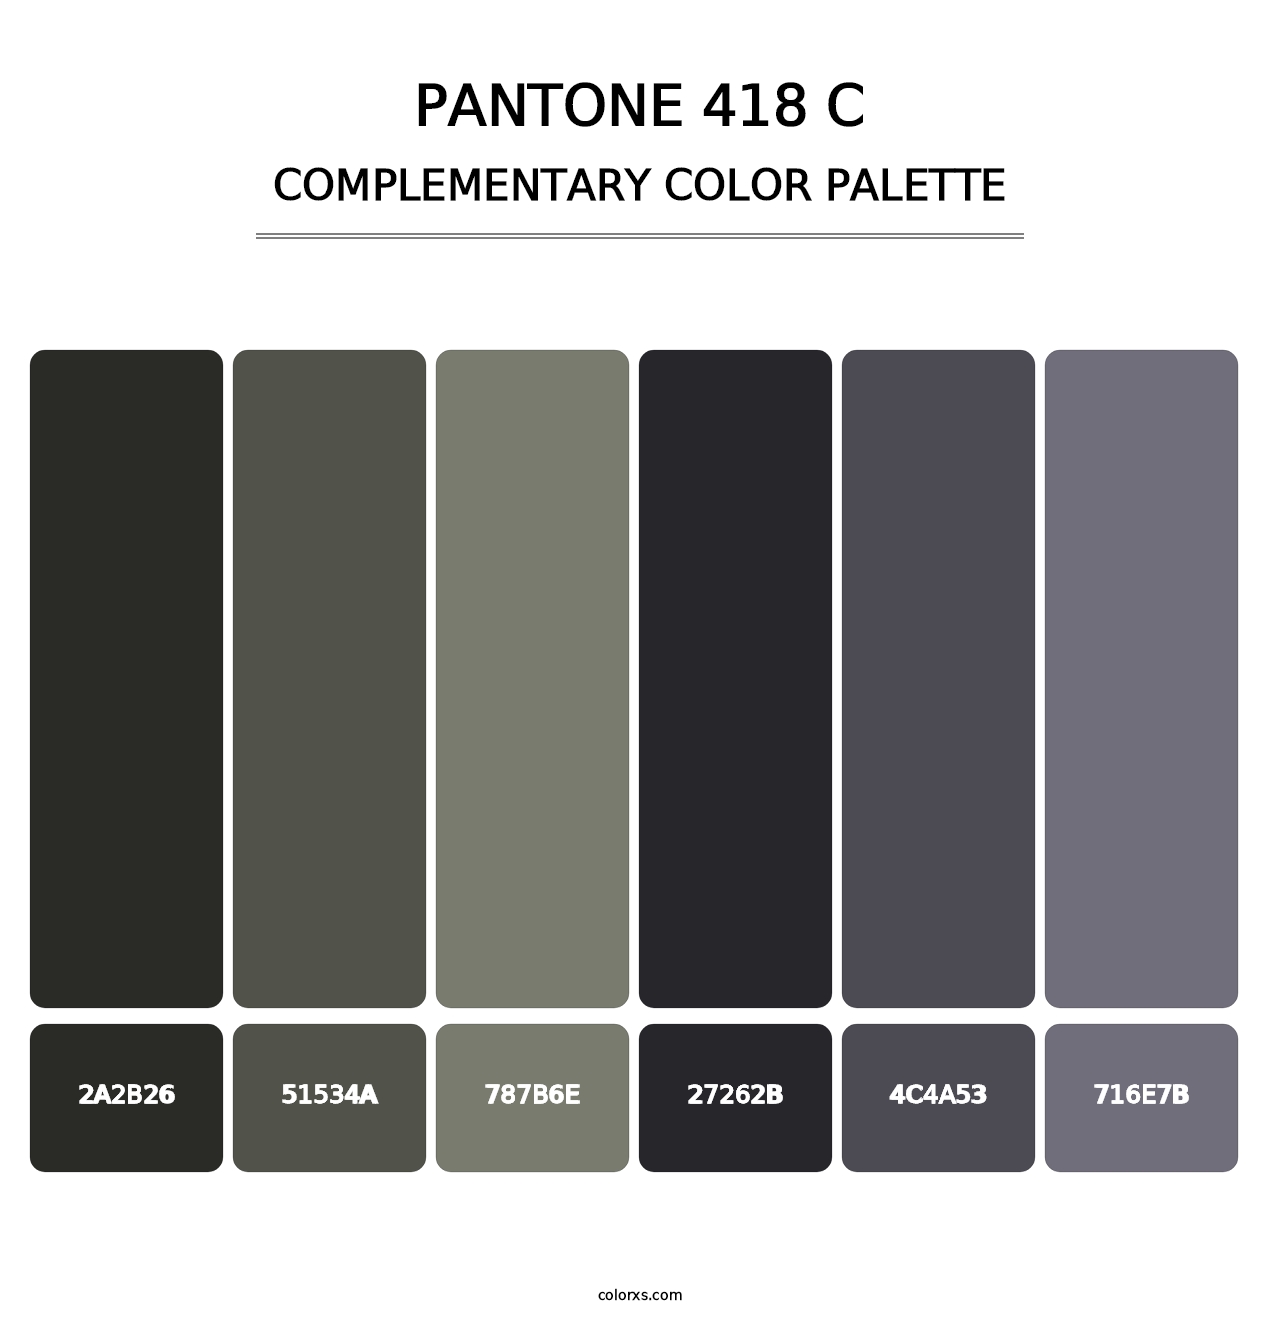 PANTONE 418 C - Complementary Color Palette